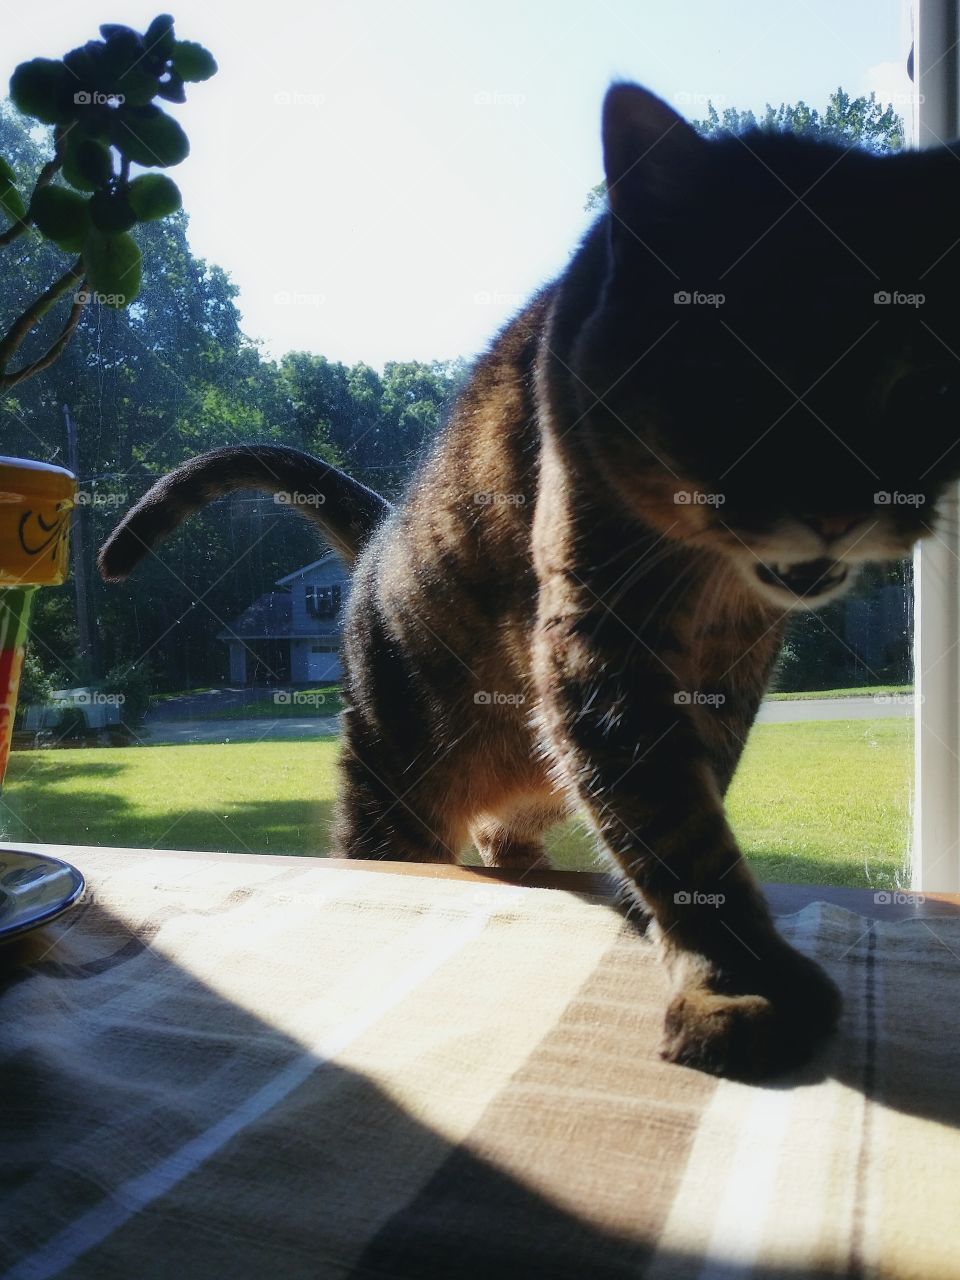 Diamond Cat exploring the kitchen window